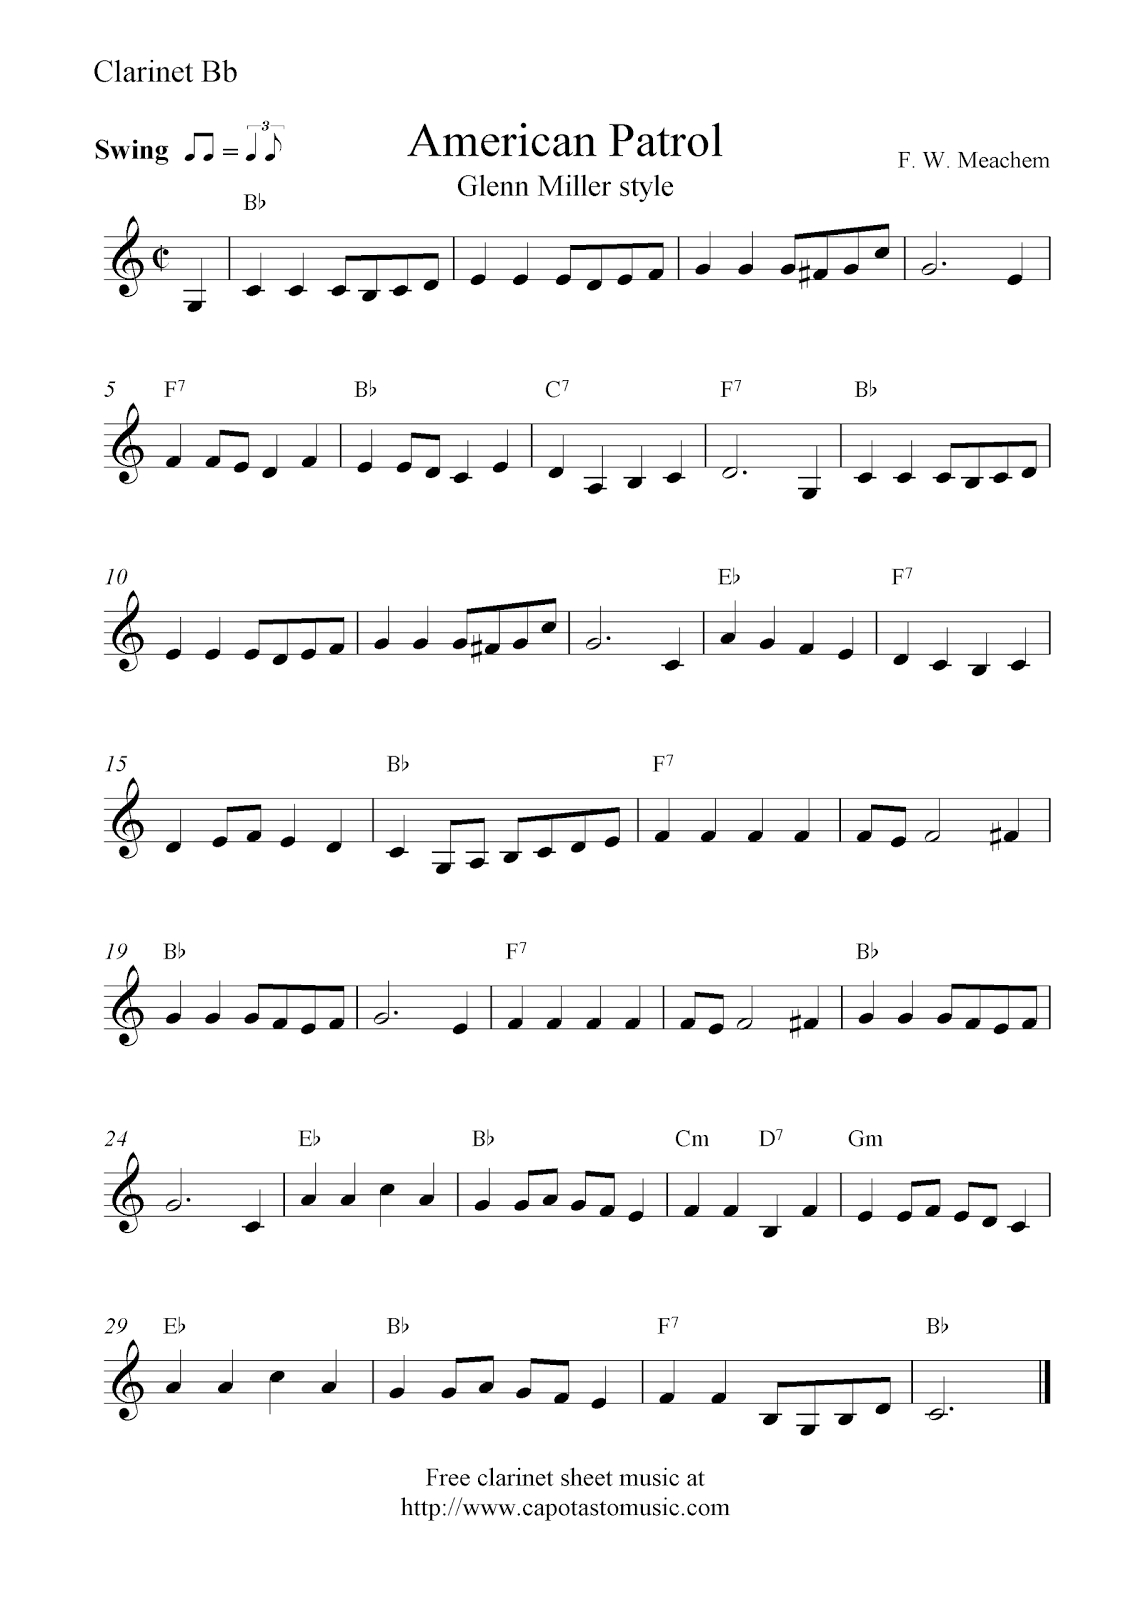 Free Sheet Music For Clarinet Printable - Free Printable